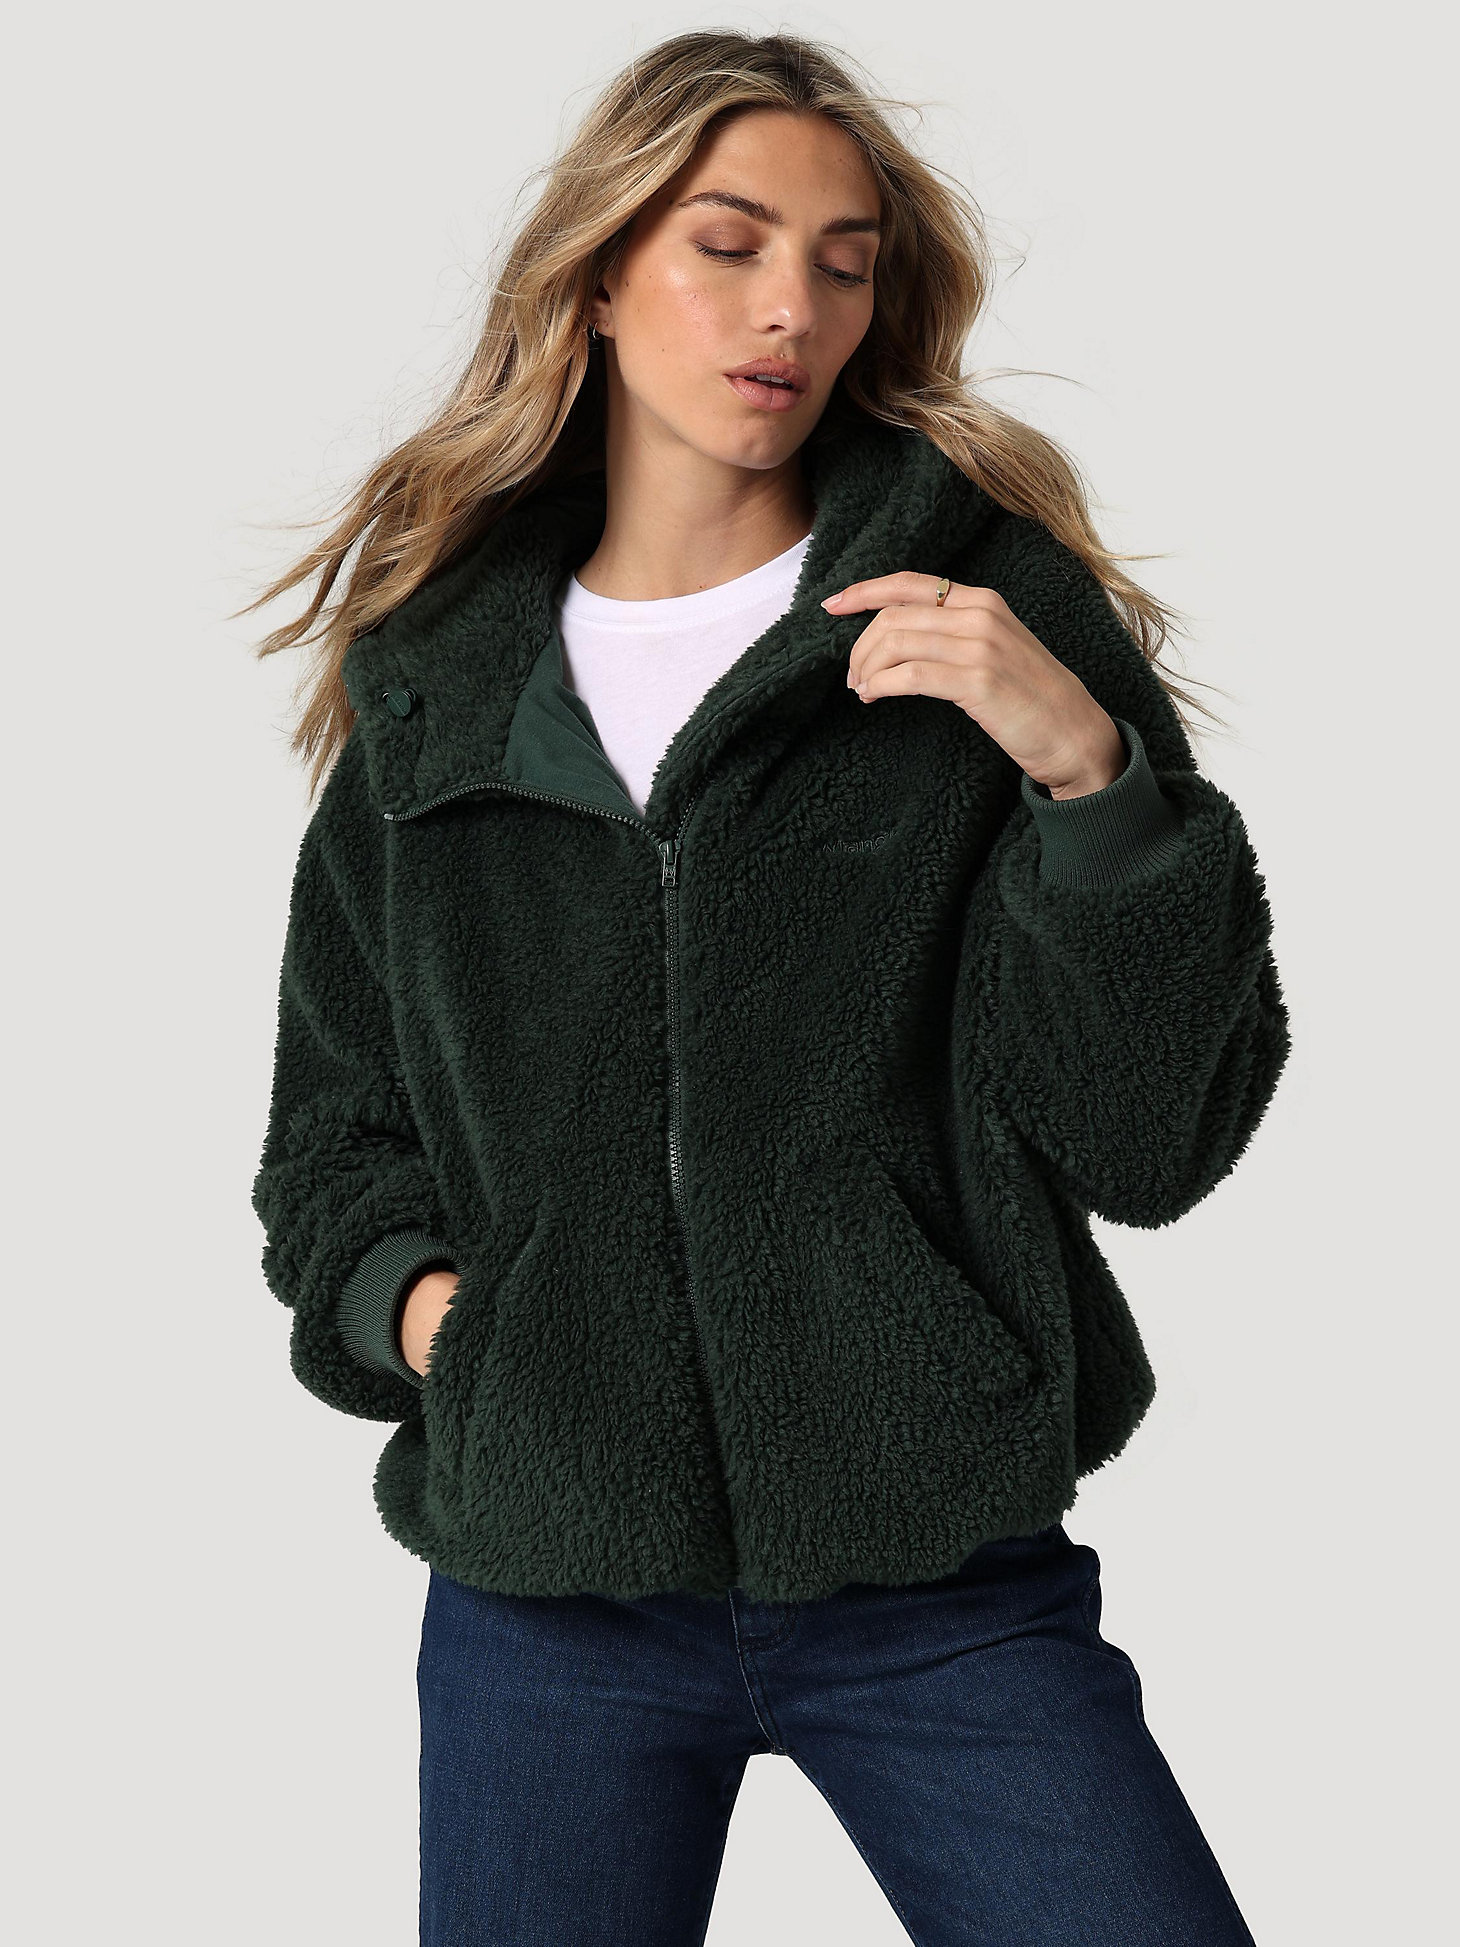 Portazai Womens Oversized Sherpa Hoodie Color Block Zip Up Fuzzy Fleece Sweatshirt Warm Pullover Sweater Coats for Women 